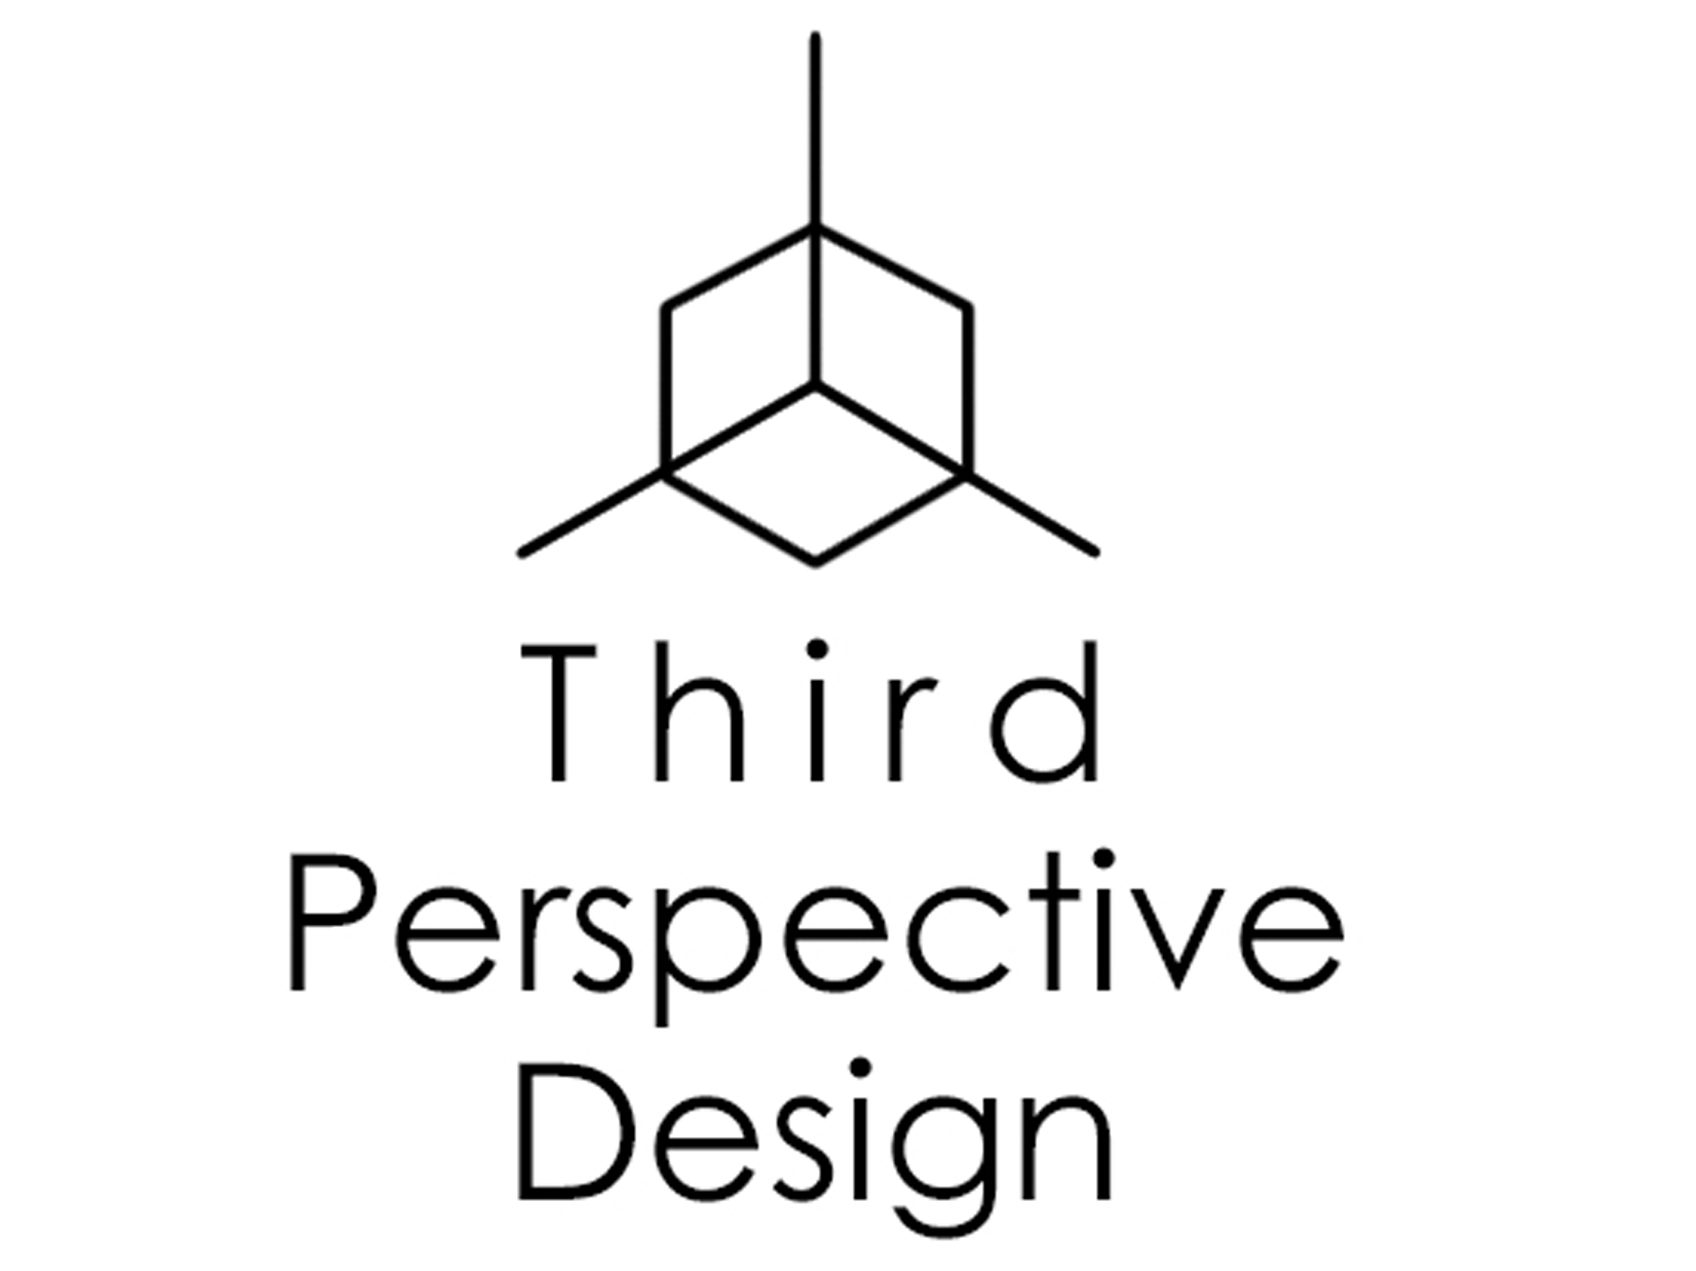 Third Perspective Design